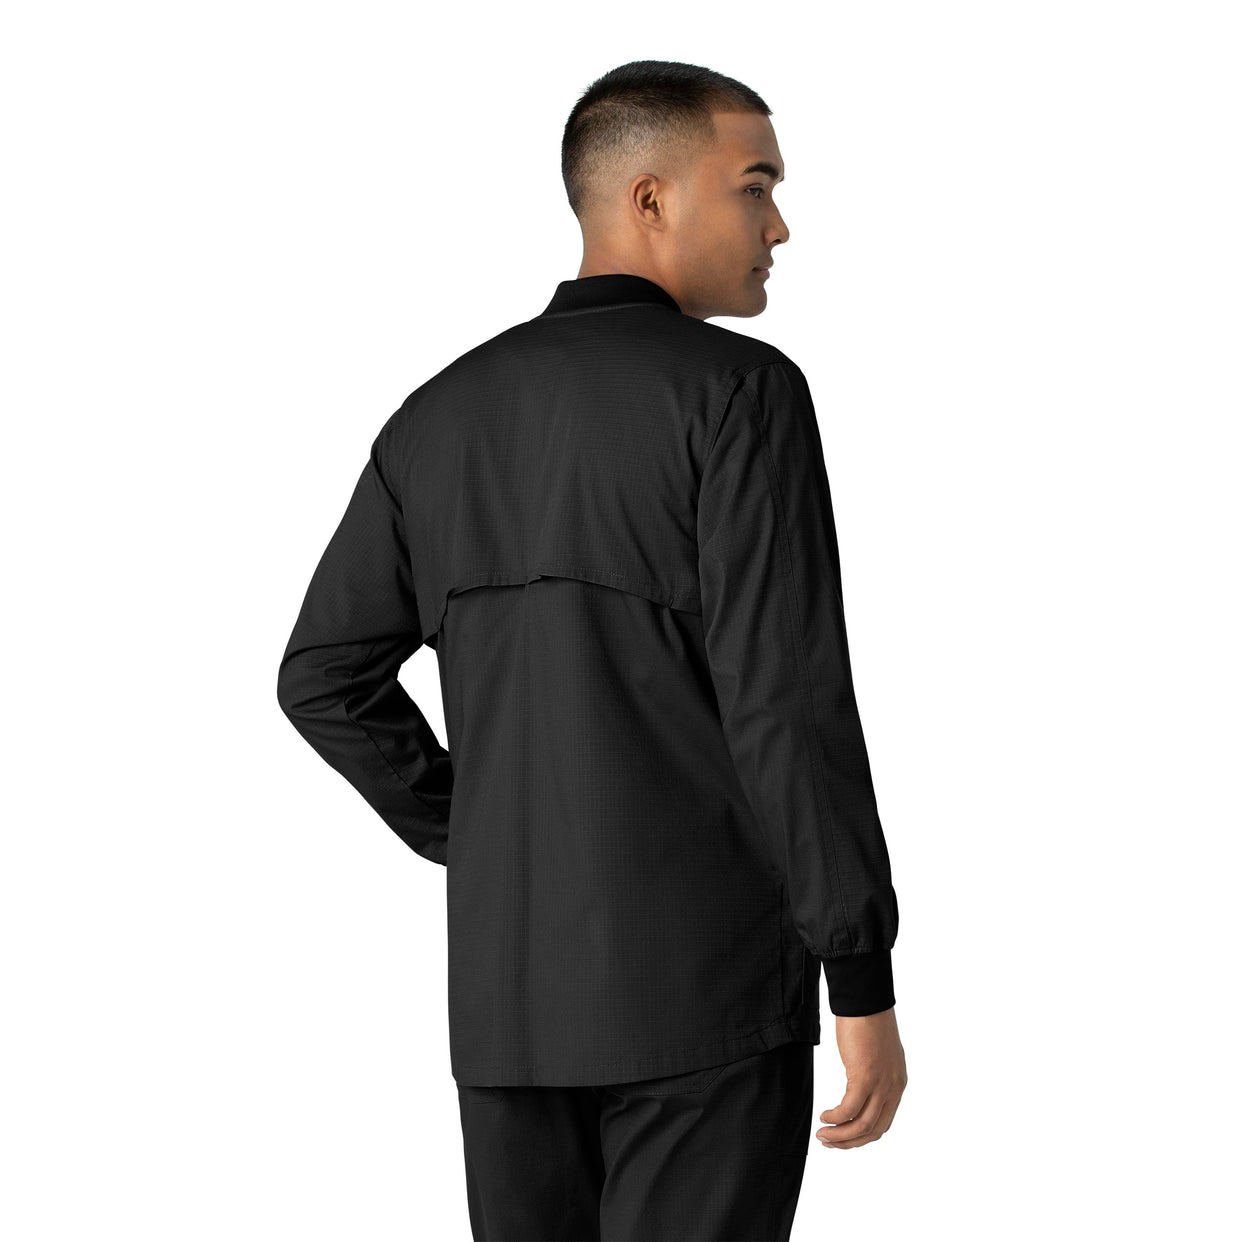 Rugged Flex Ripstop Men's Utility Warm-Up Jacket Black back view